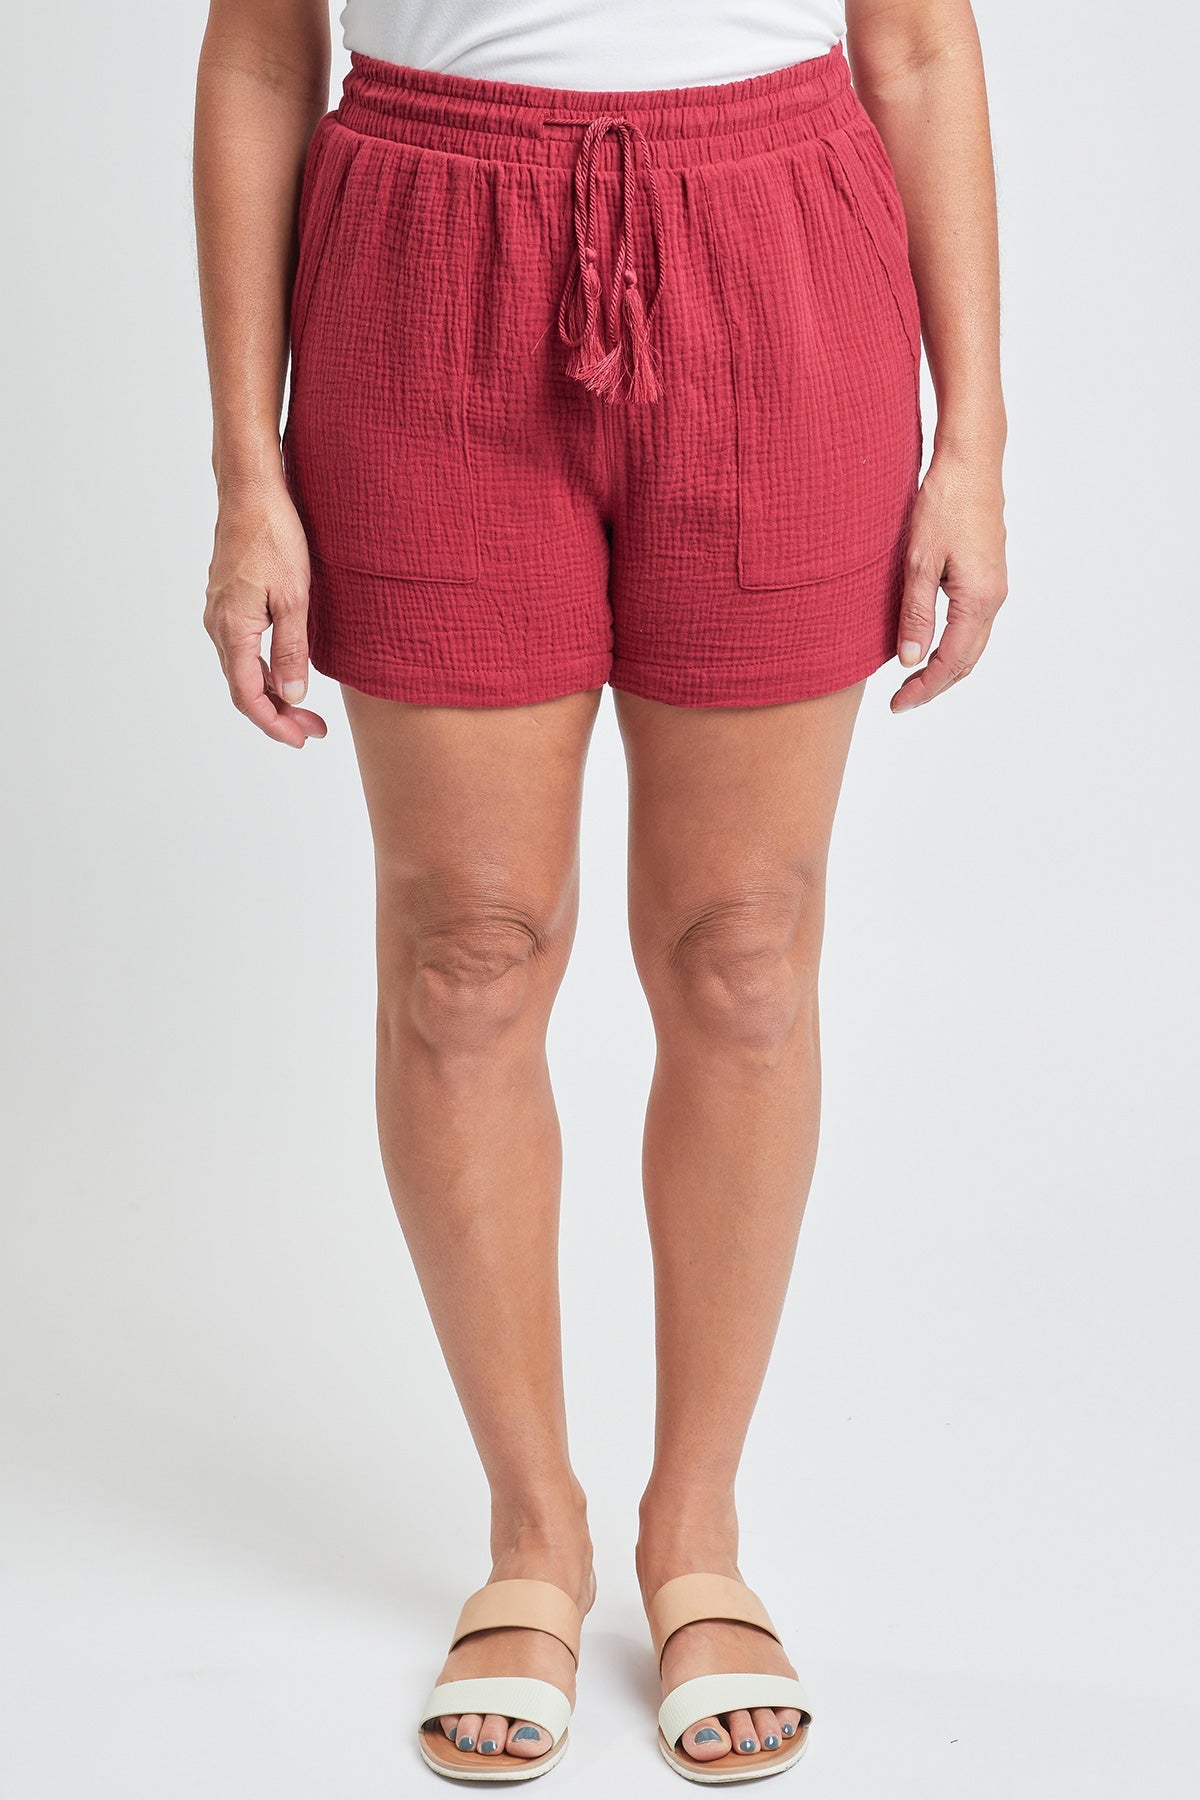 Women's Tammy Tulip Shorts Collaboration with Sew Caroline